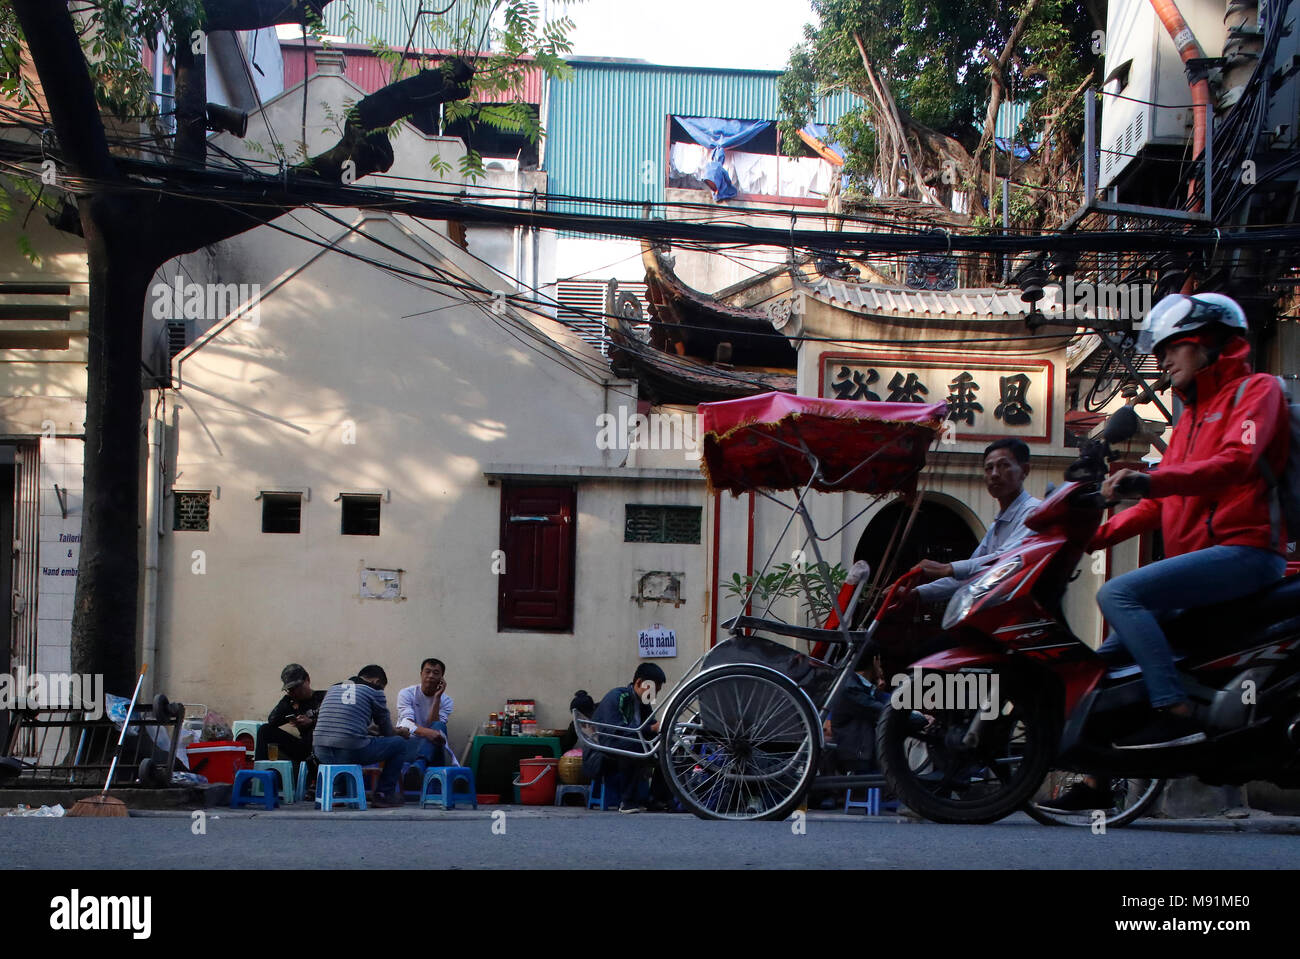 Calle típica del casco antiguo de Hanoi. La vida caótica calle tráfico. Vietnam. Foto de stock